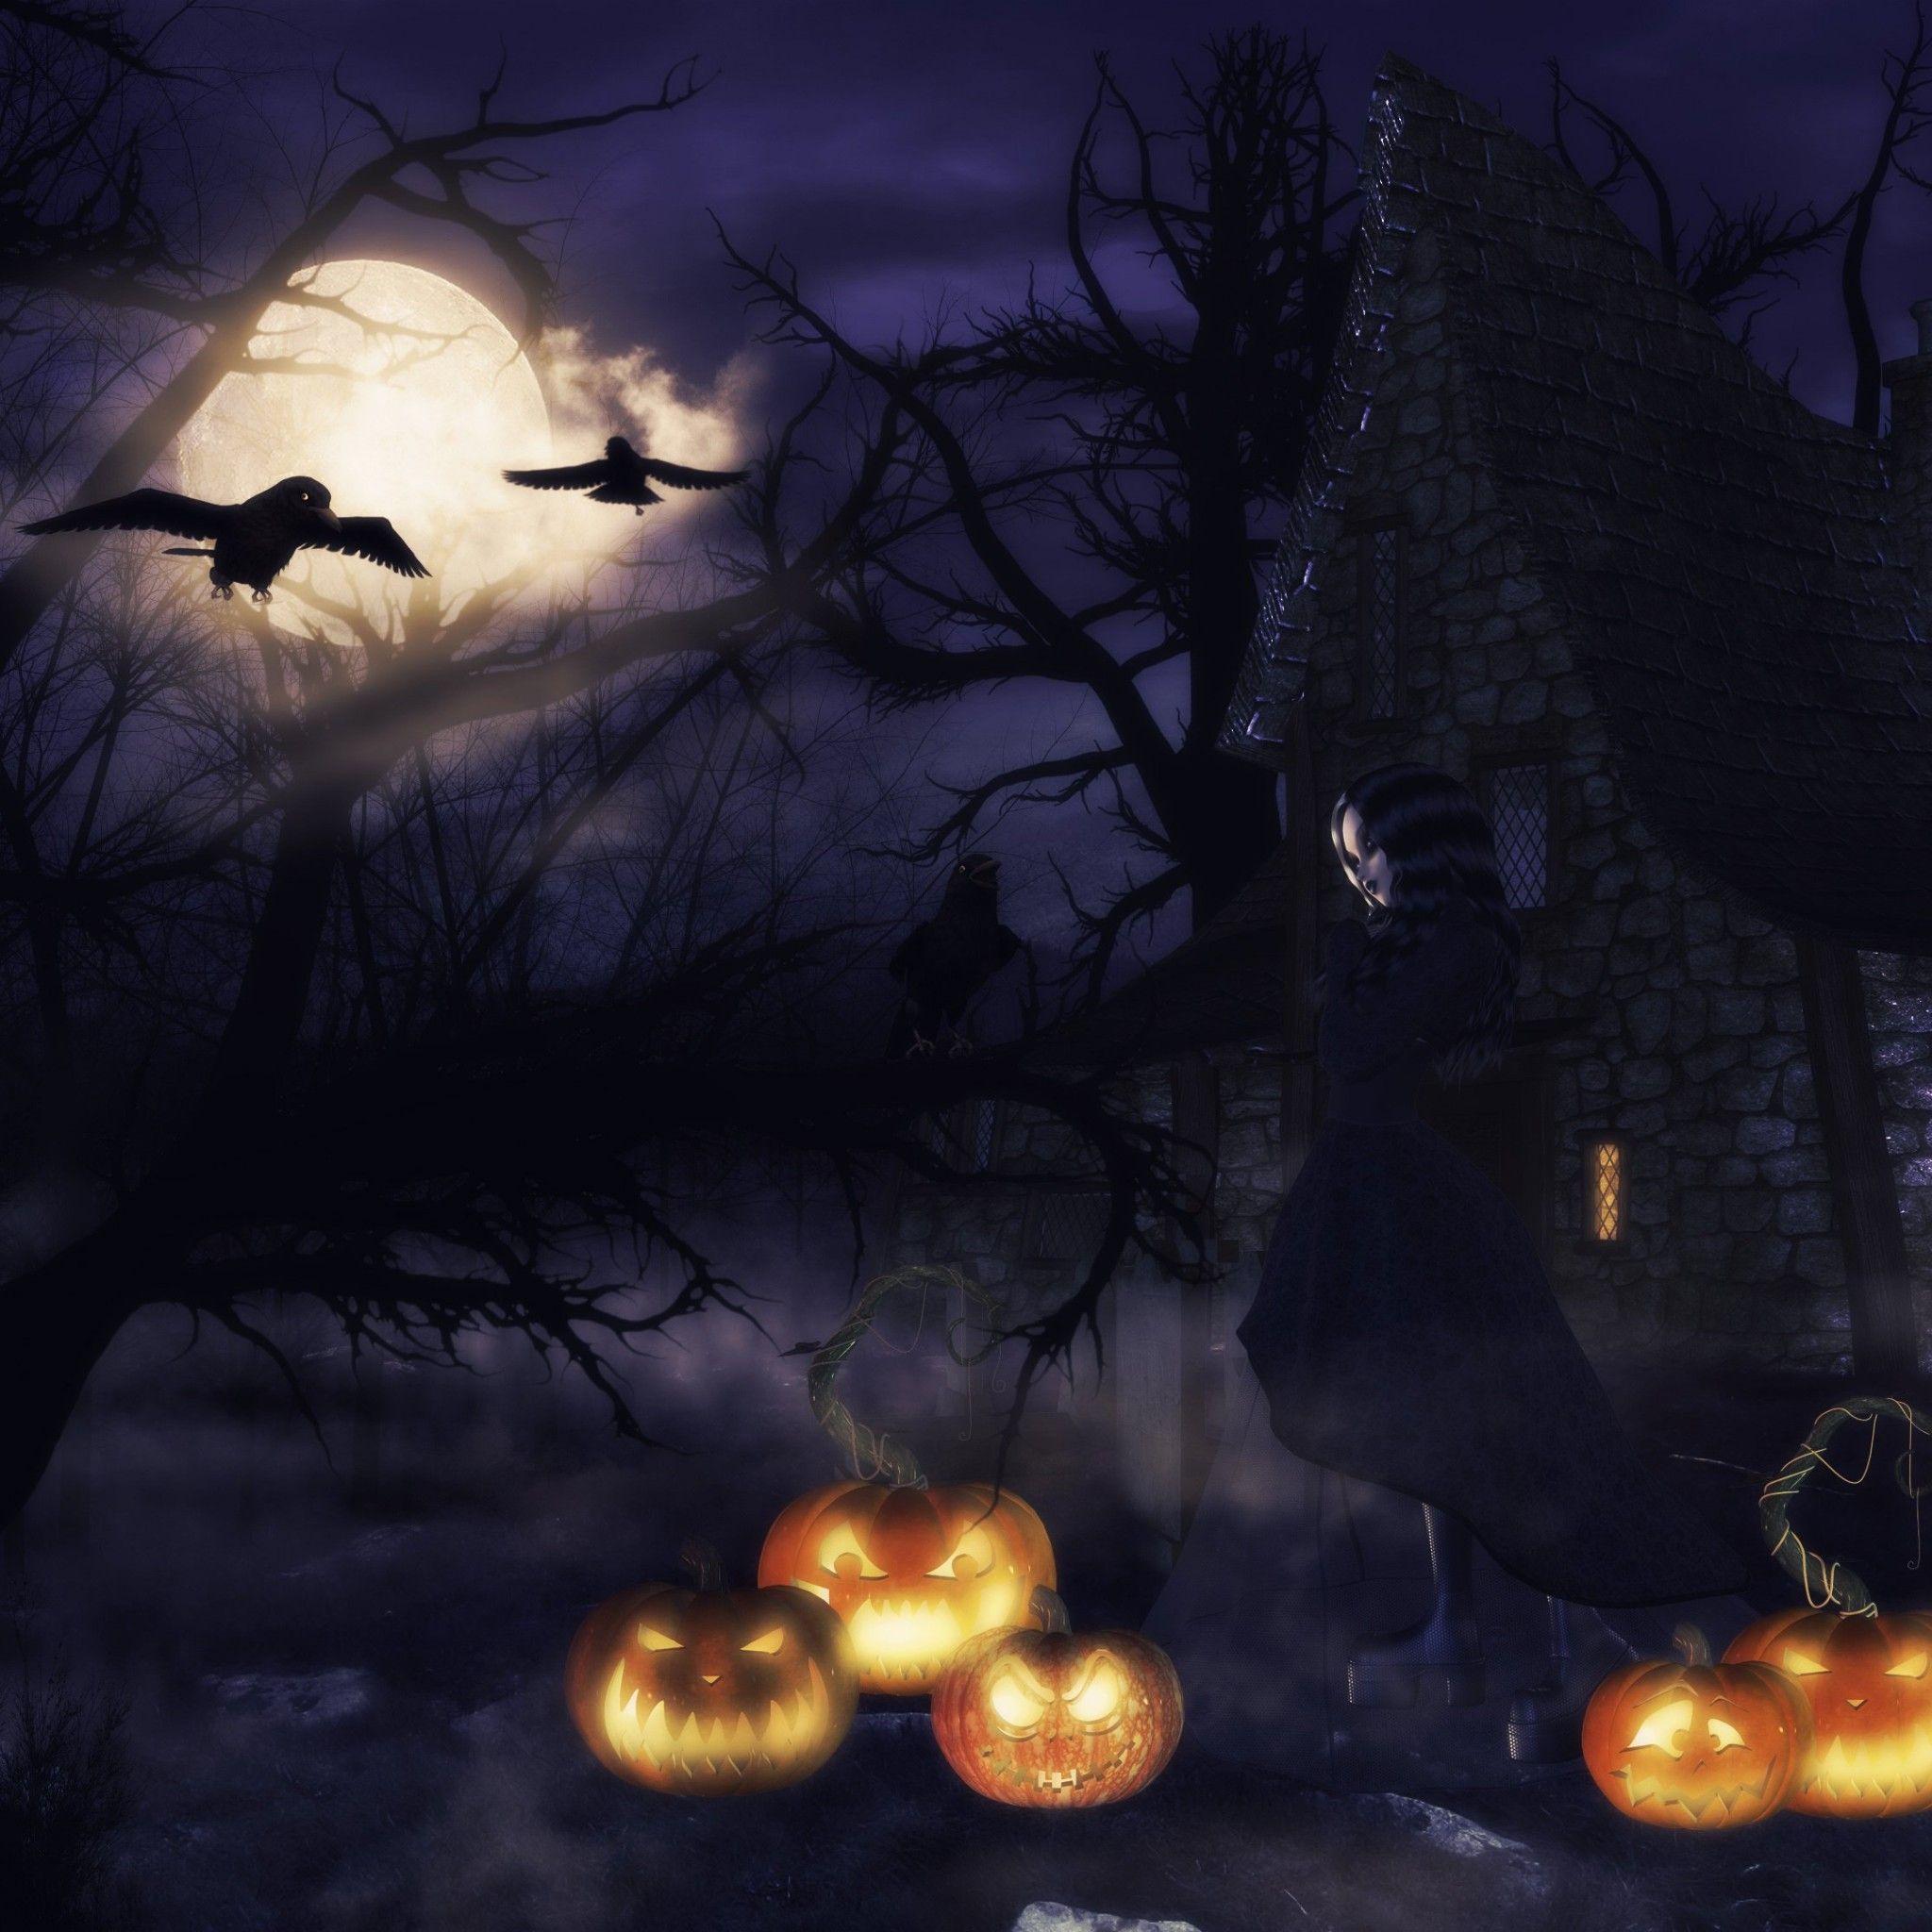 Halloween Horror Night to see great Halloween wallpaper